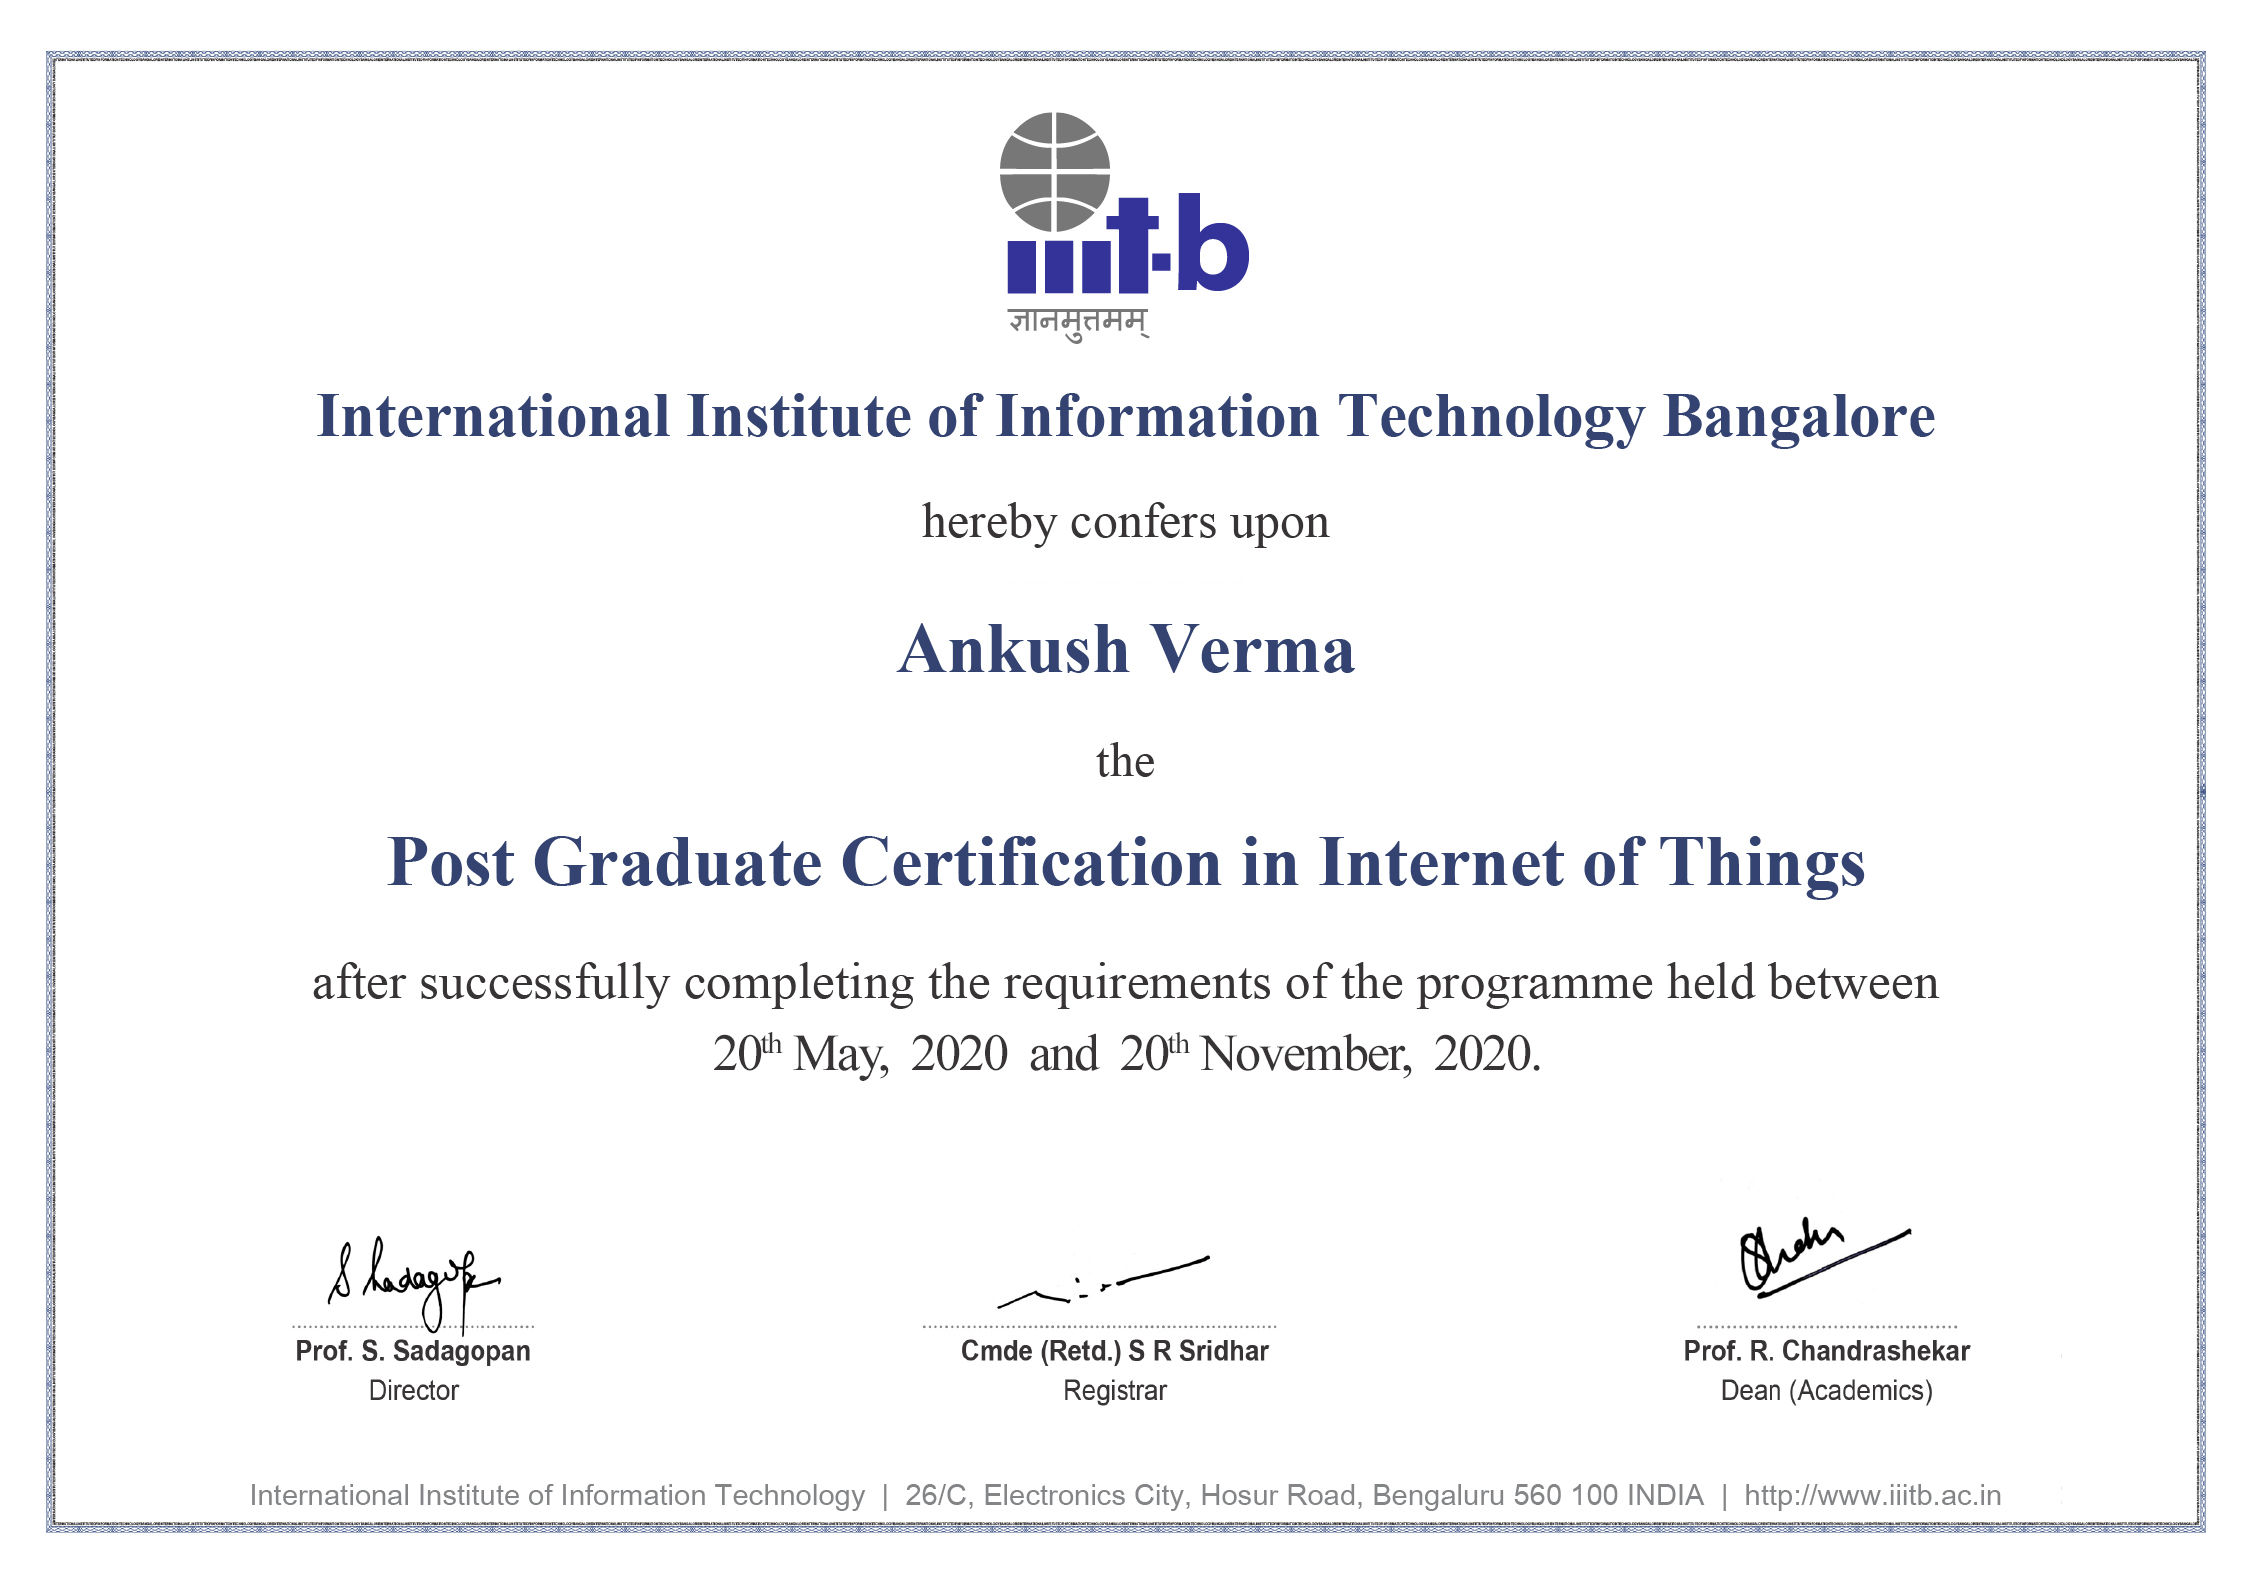 Post Graduate Certification from IIIT Bangalore